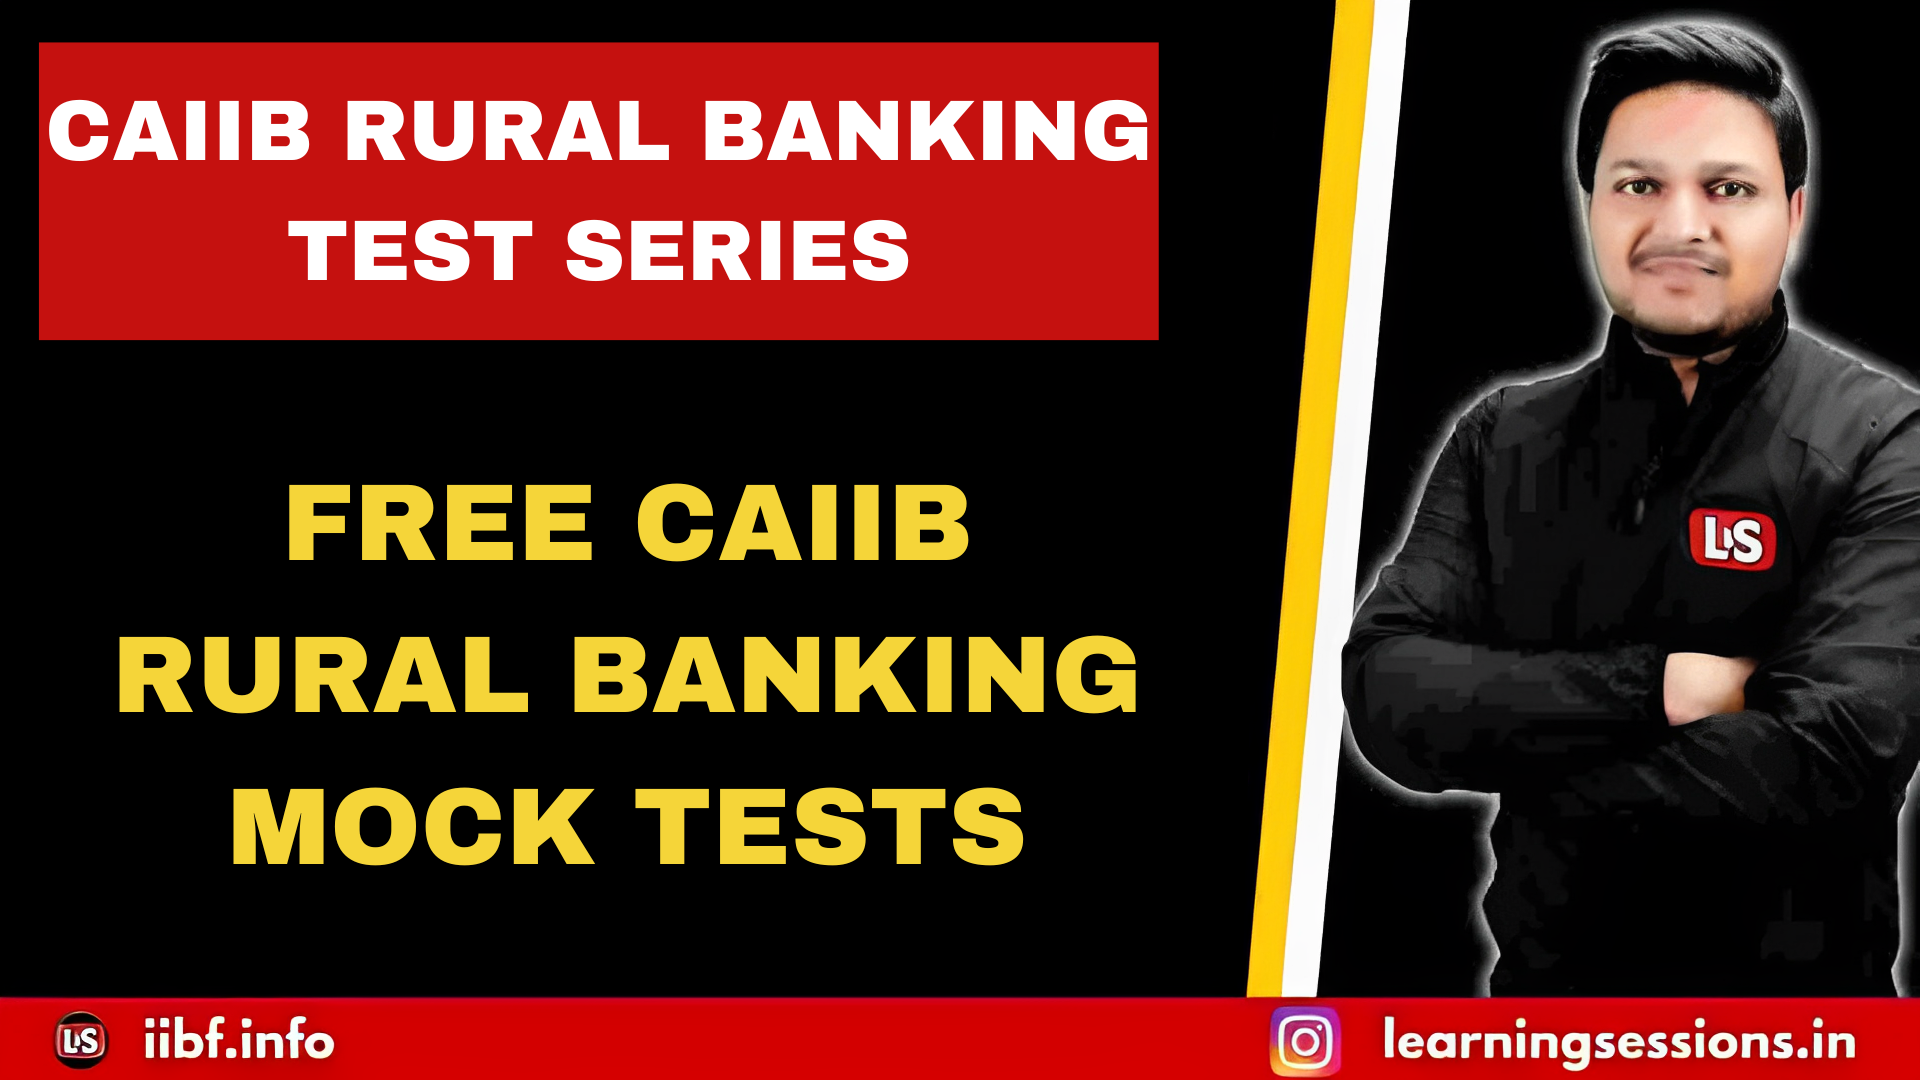 FREE CAIIB RURAL BANKING MOCK TESTS